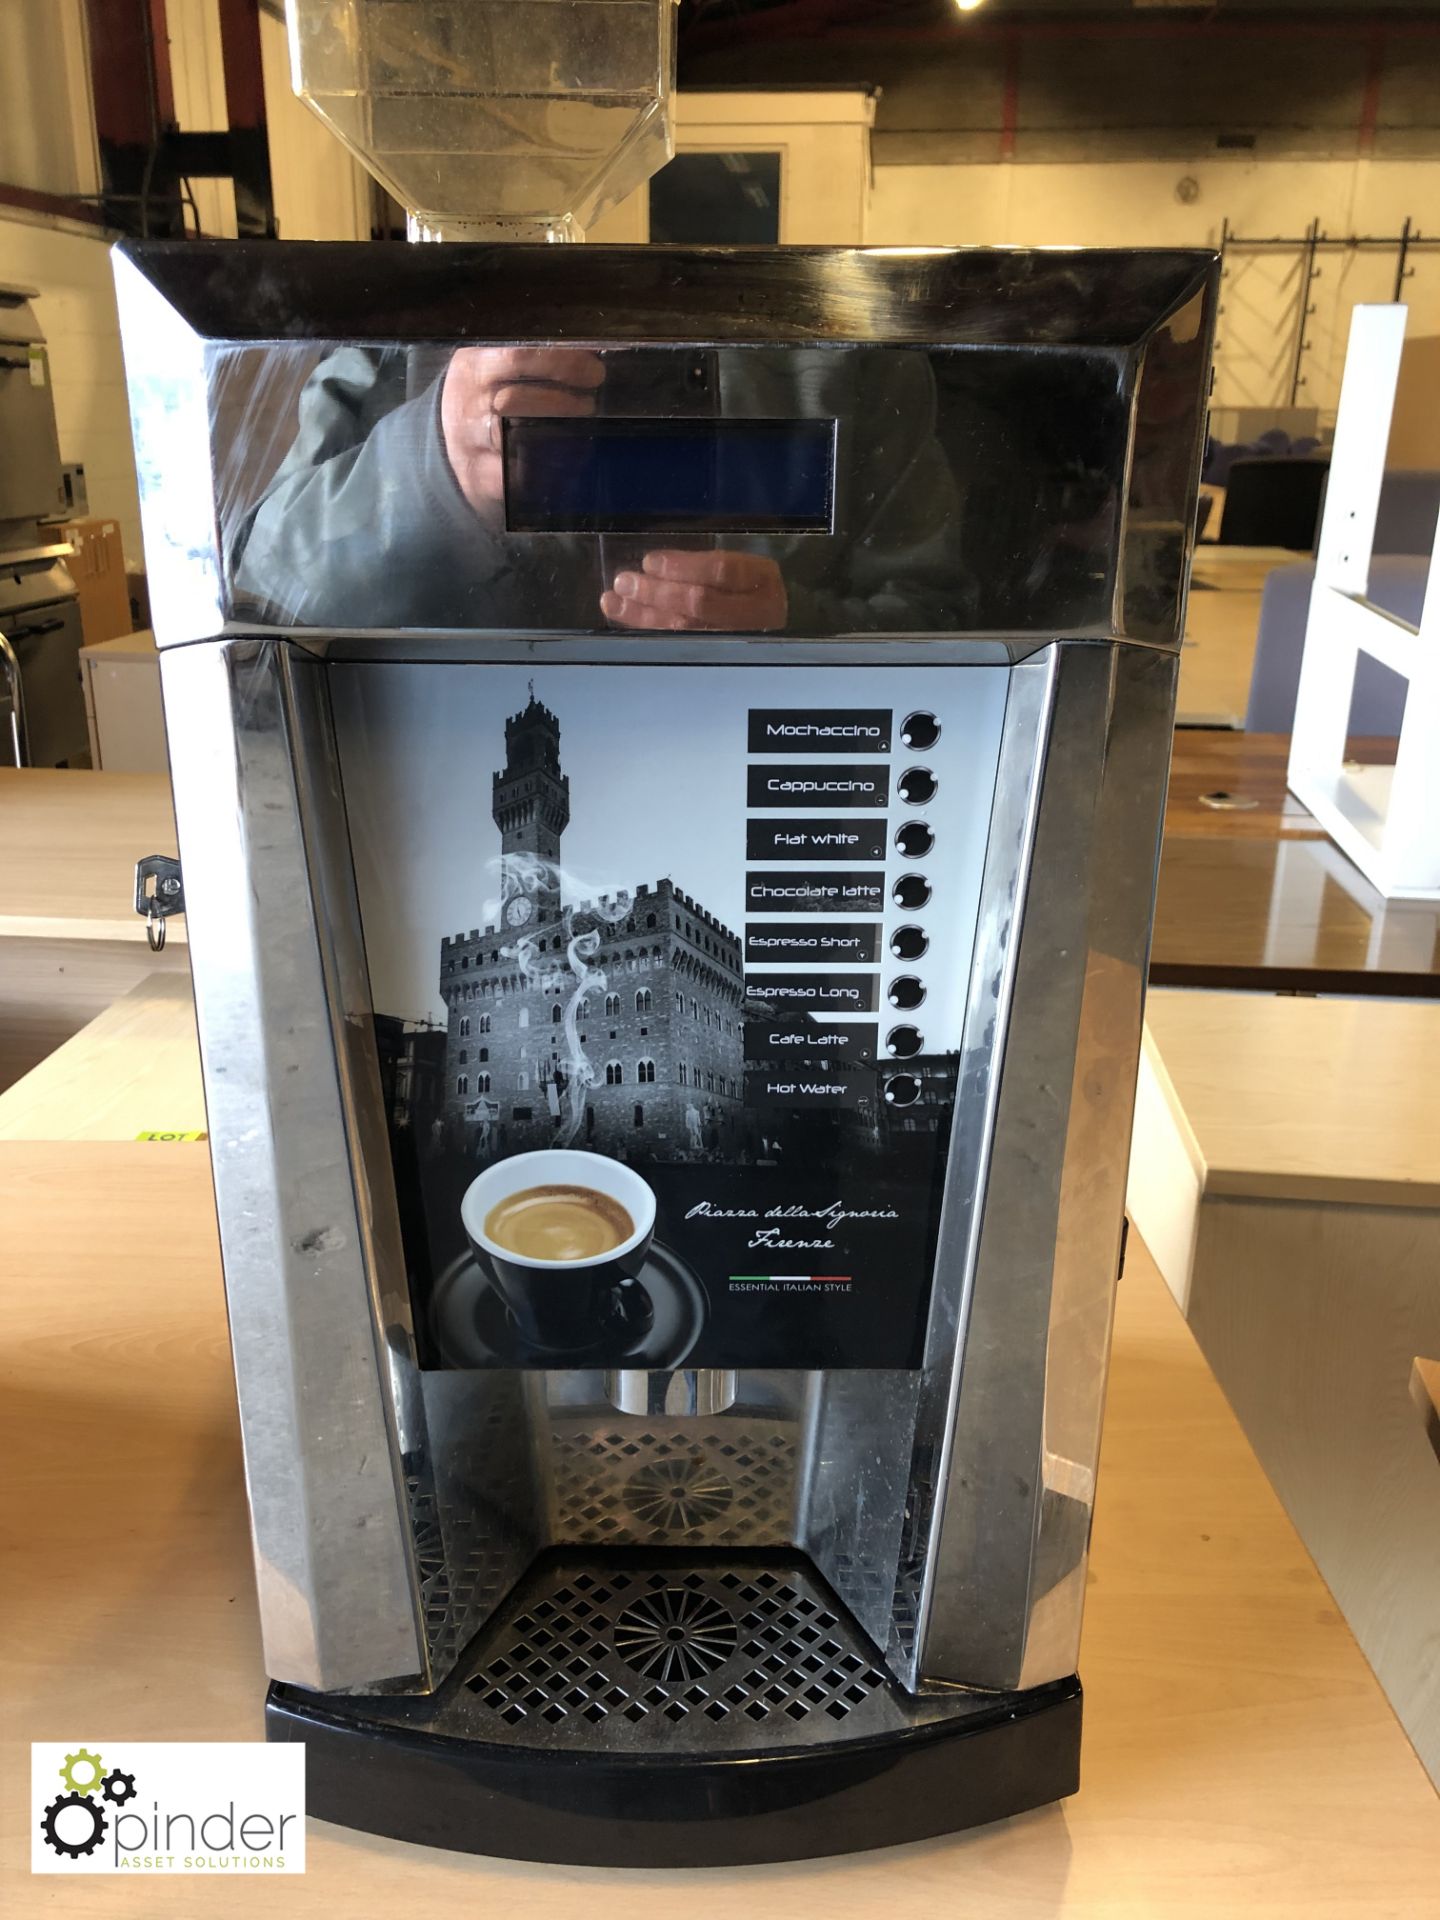 Acom Illymax FO50 Coffee Machine, serial number 39